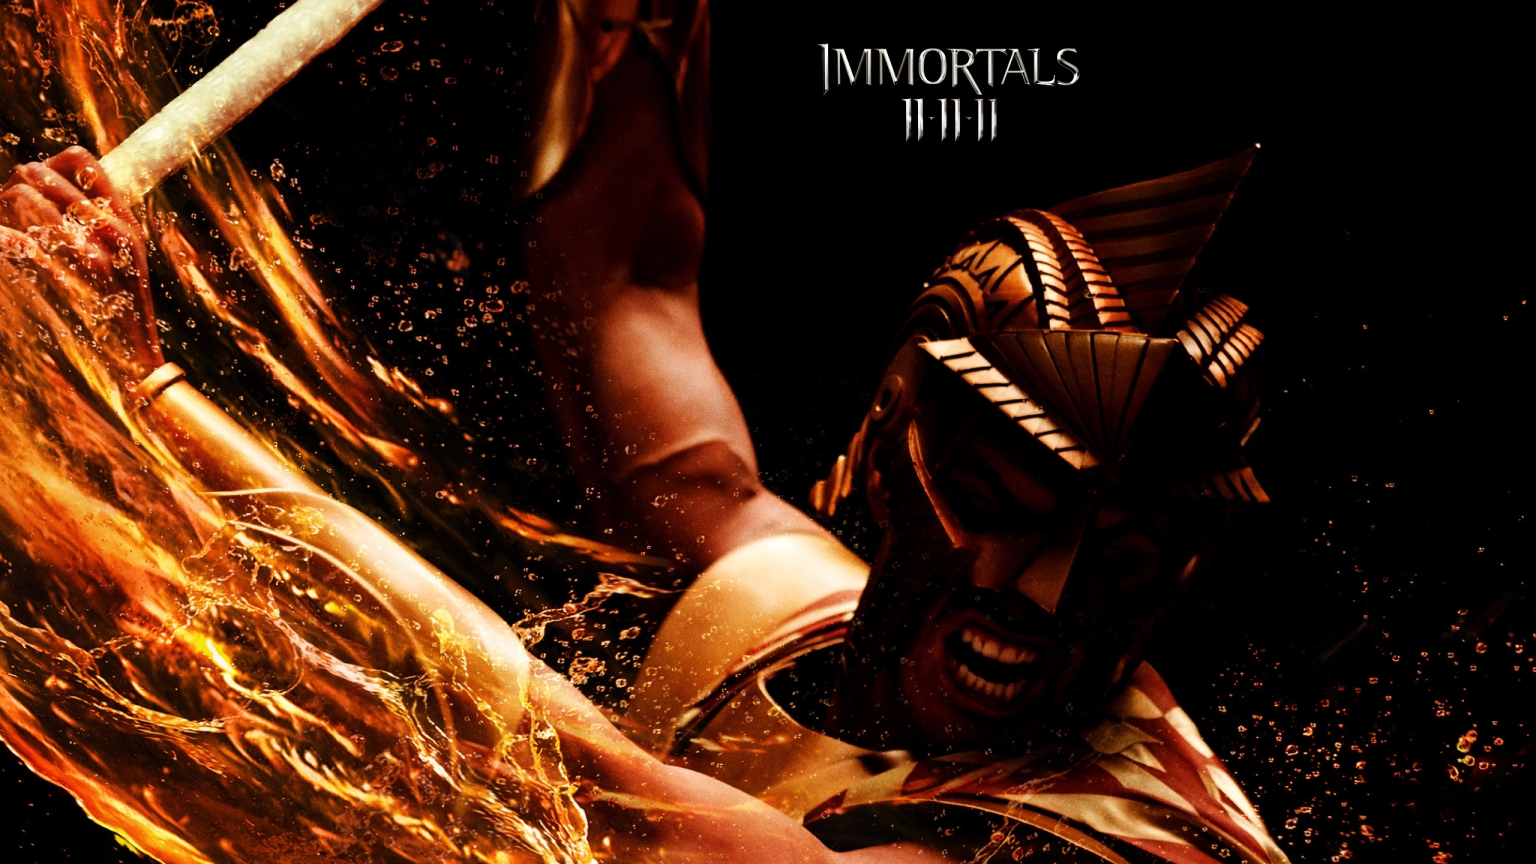 Immortals 2011 Movie for 1536 x 864 HDTV resolution